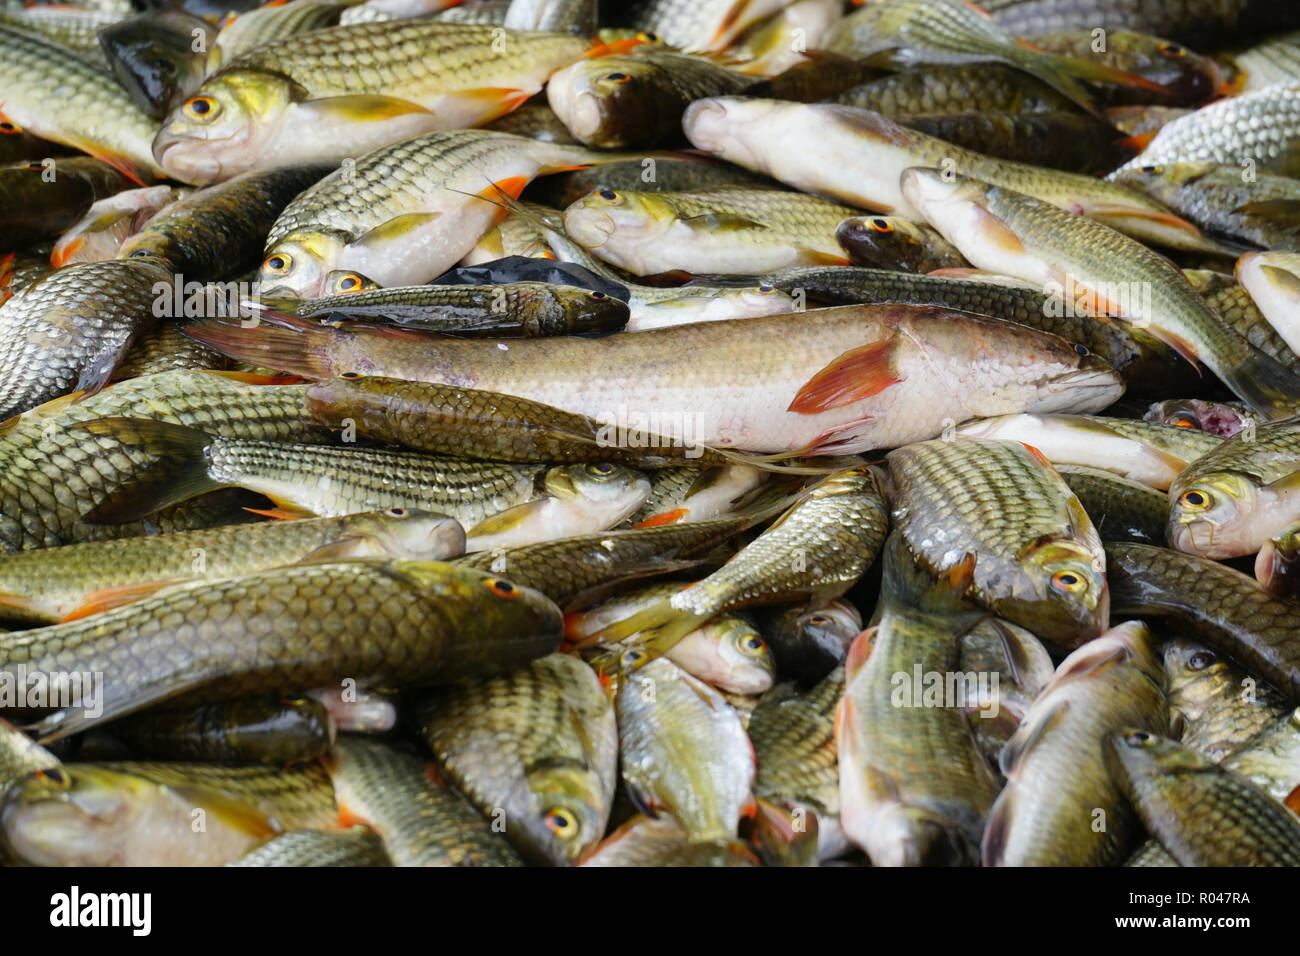 Abundance of Sabah Malaysia Borneo freshwater river fishes at market display. Stock Photo